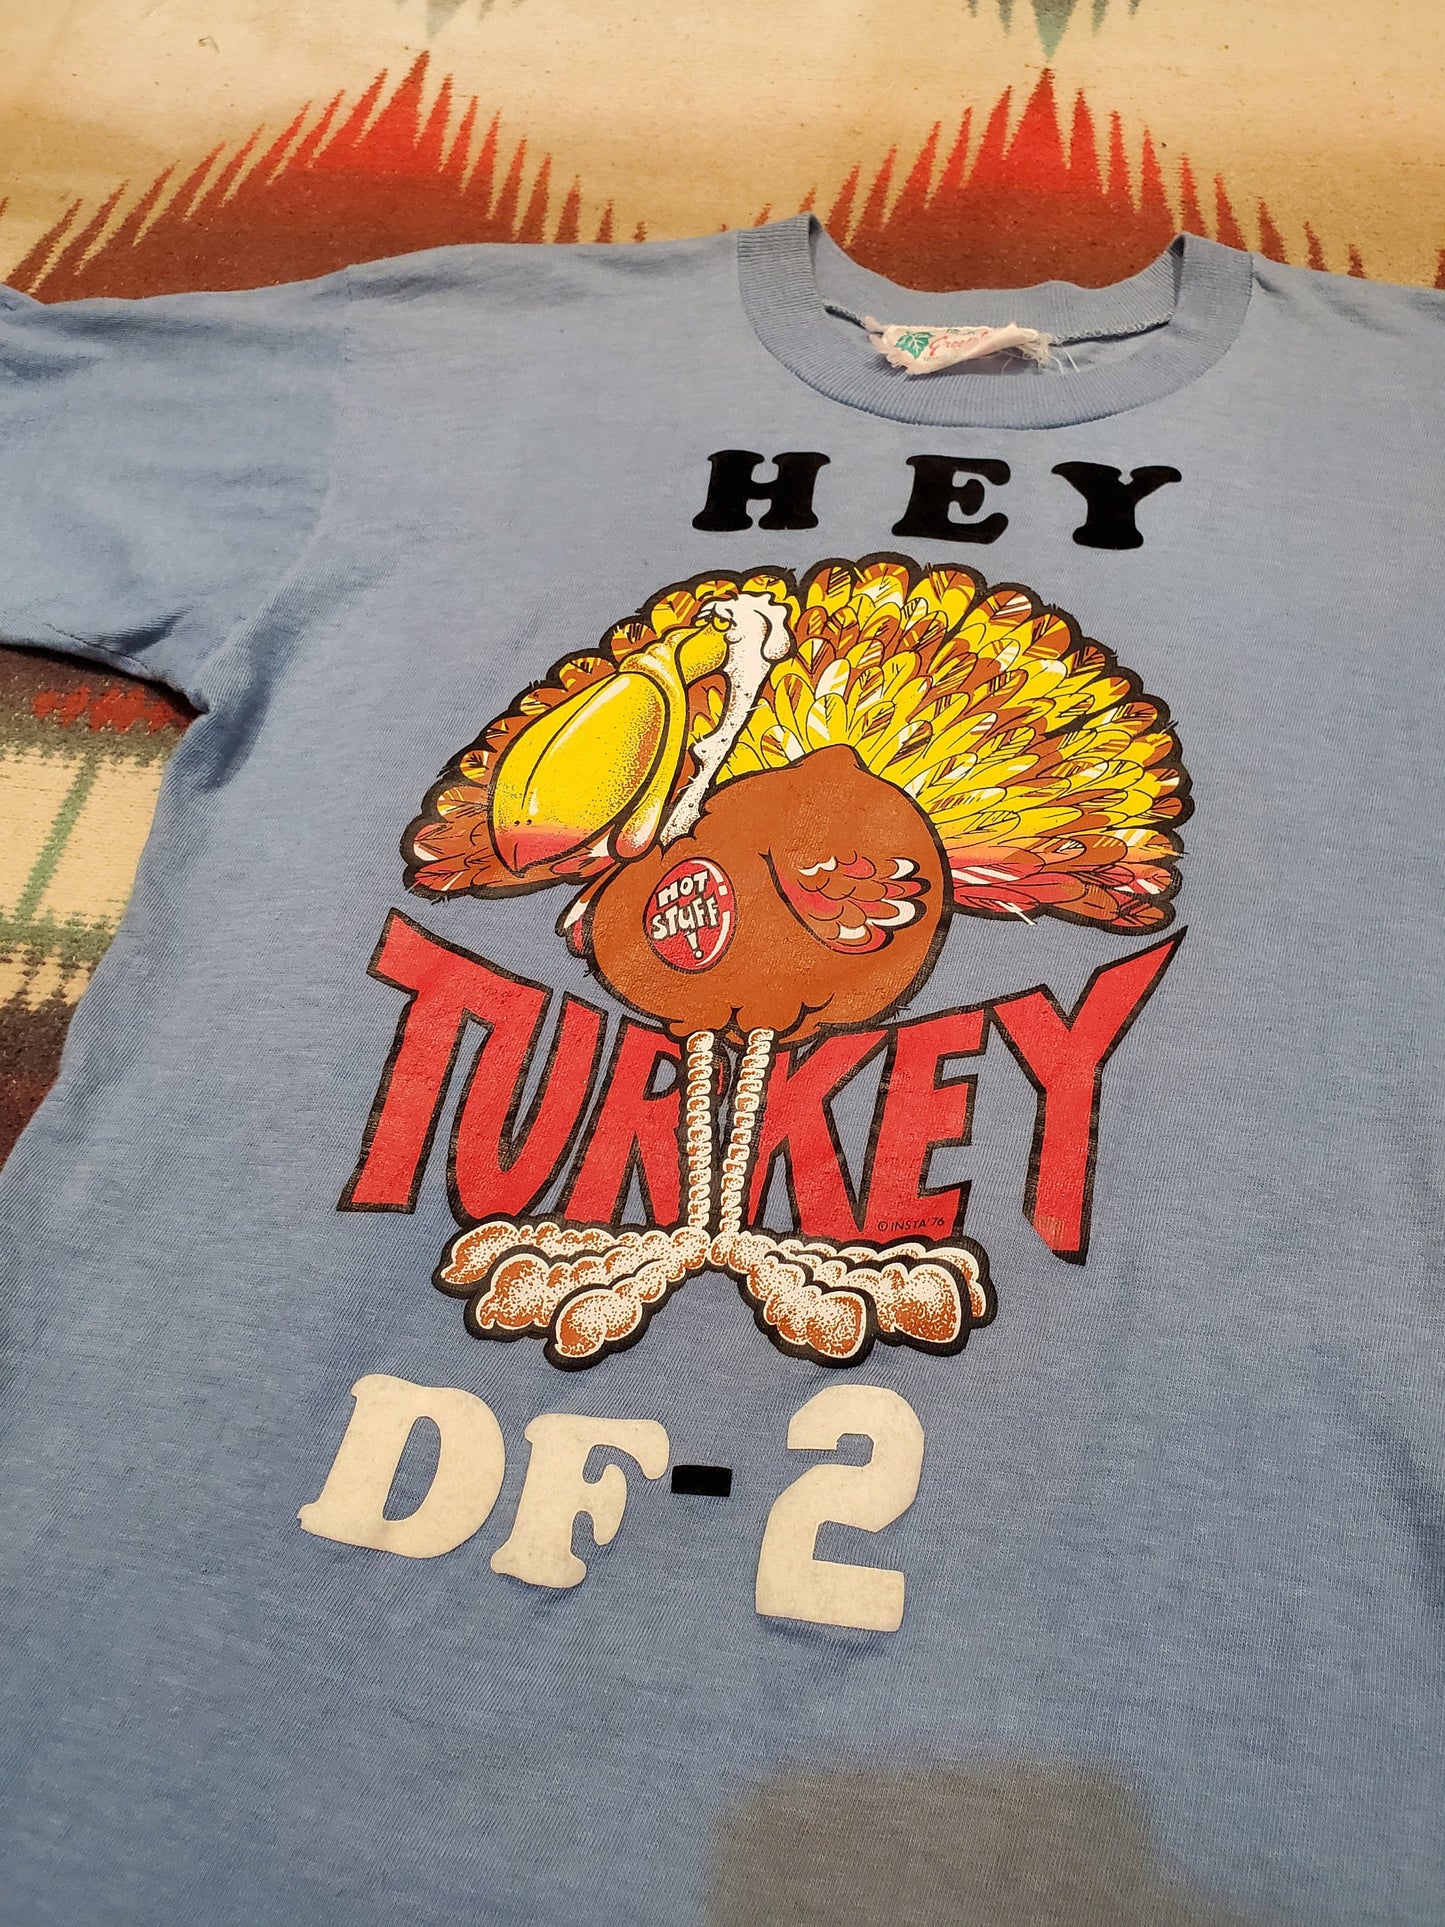 1970s 1976 Hey Turkey Hot Stuff DF-2 Flock Letter Print T-Shirt Size S